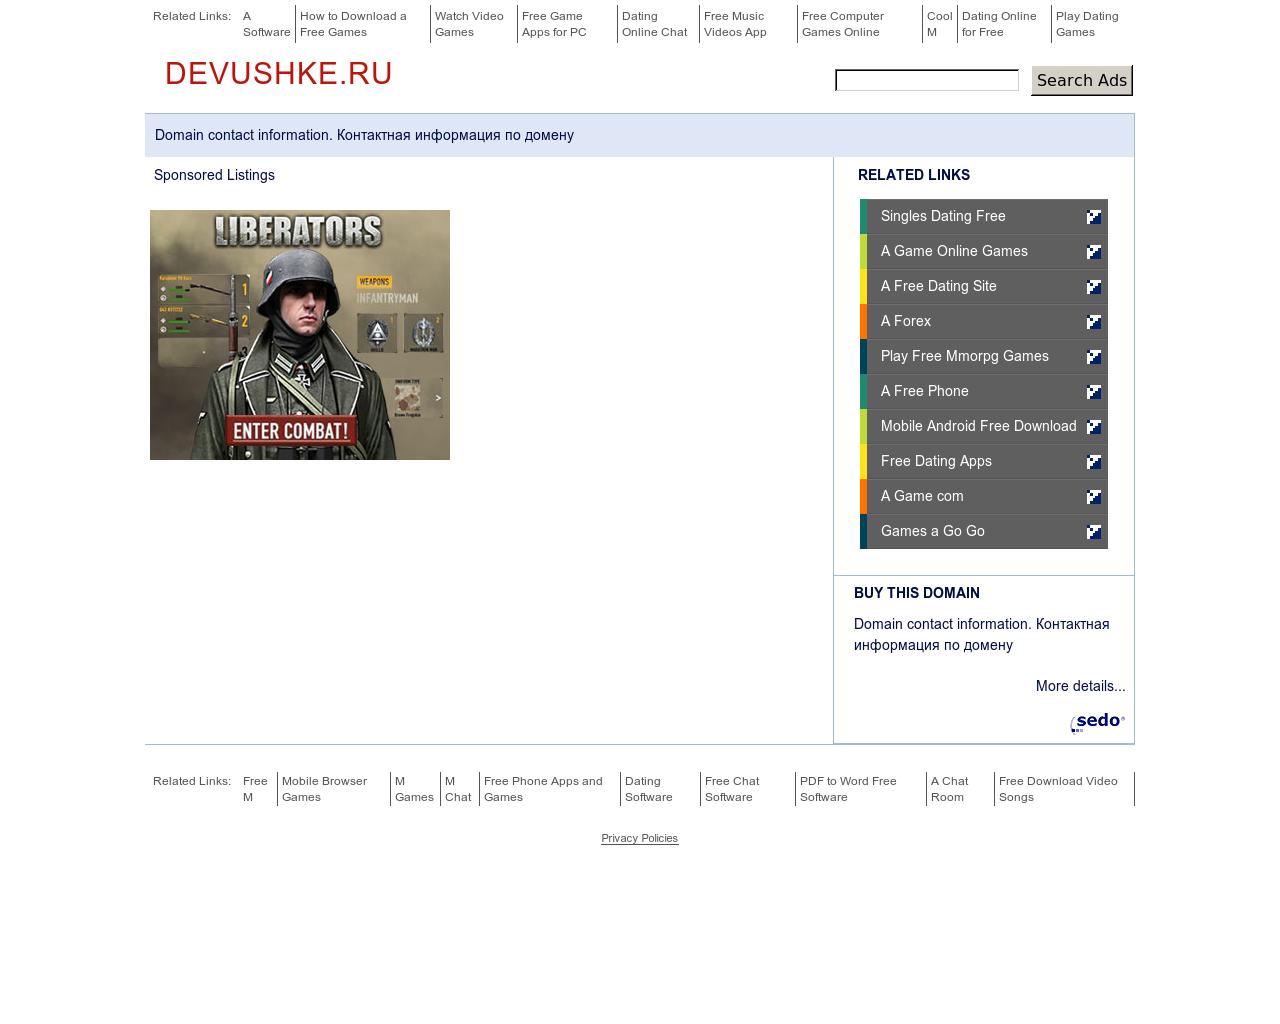 Изображение сайта devushke.ru в разрешении 1280x1024